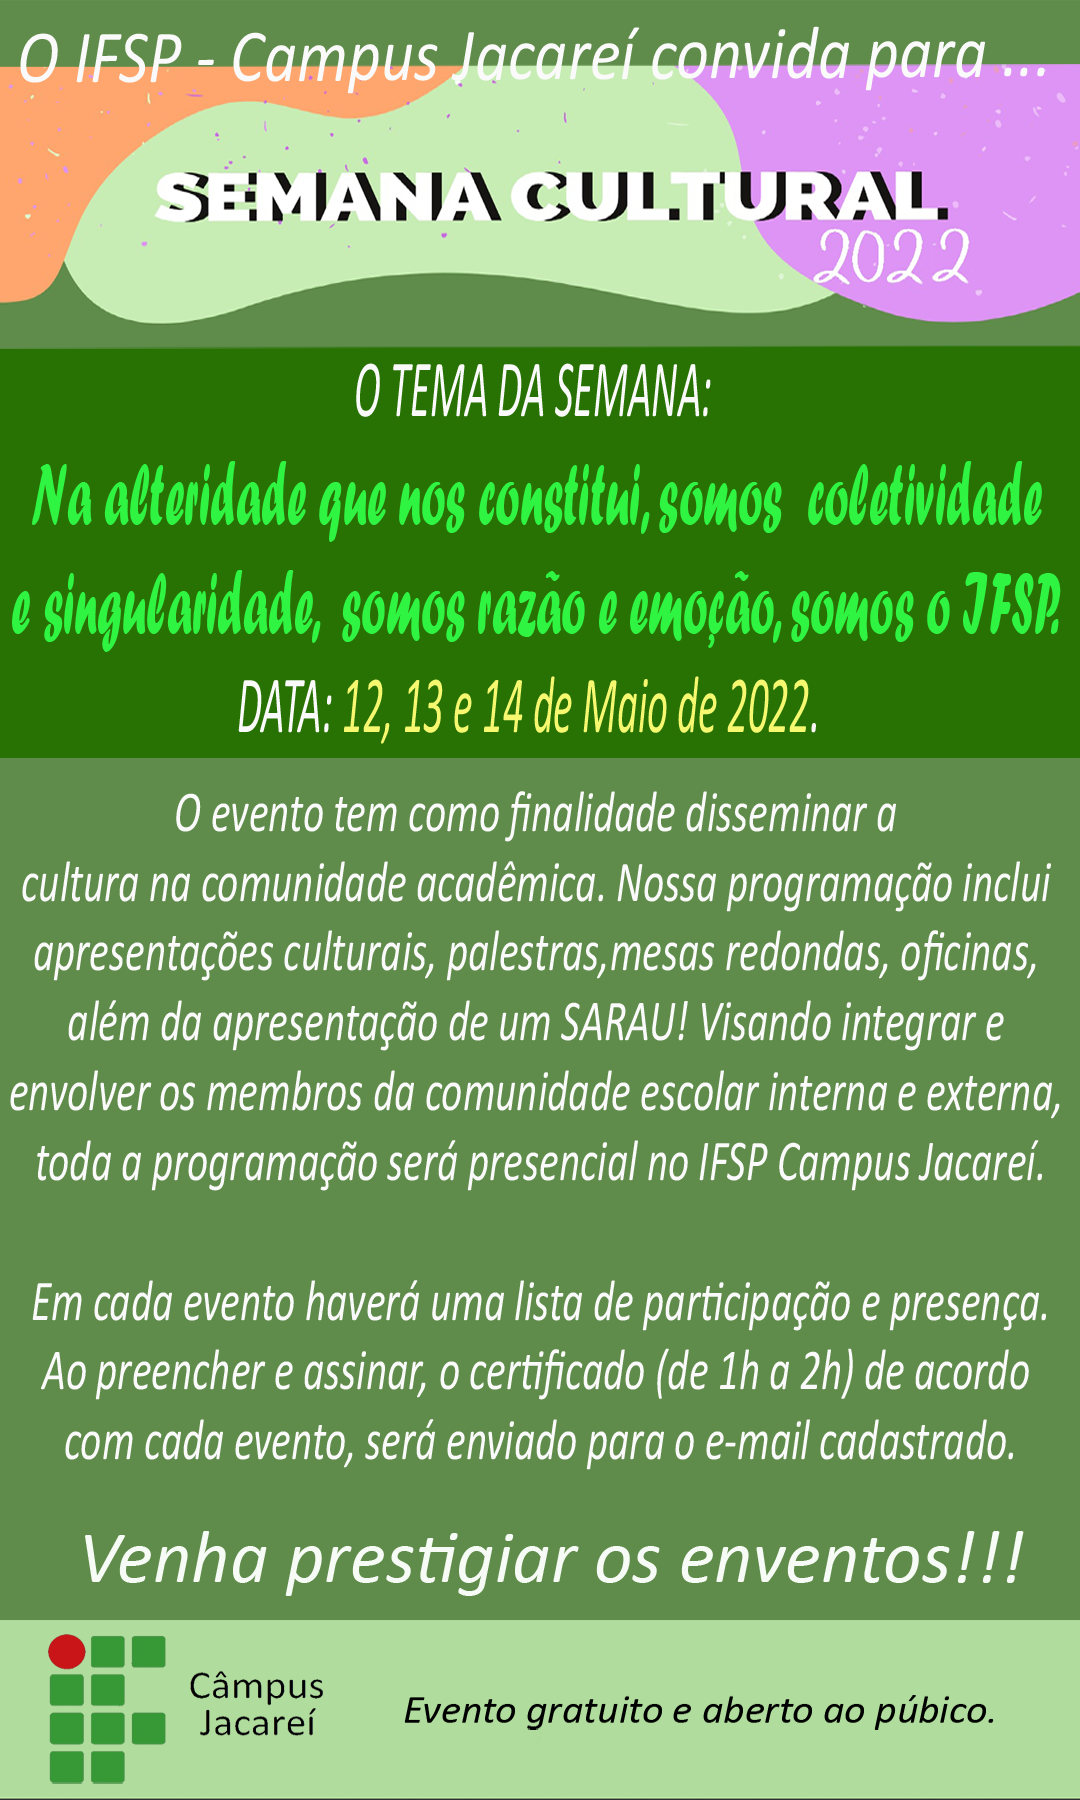 Foto de Semana Cultural IFSP-JCR 2022 - Prática Corporal: Tchoukball, Slackline, Mancala